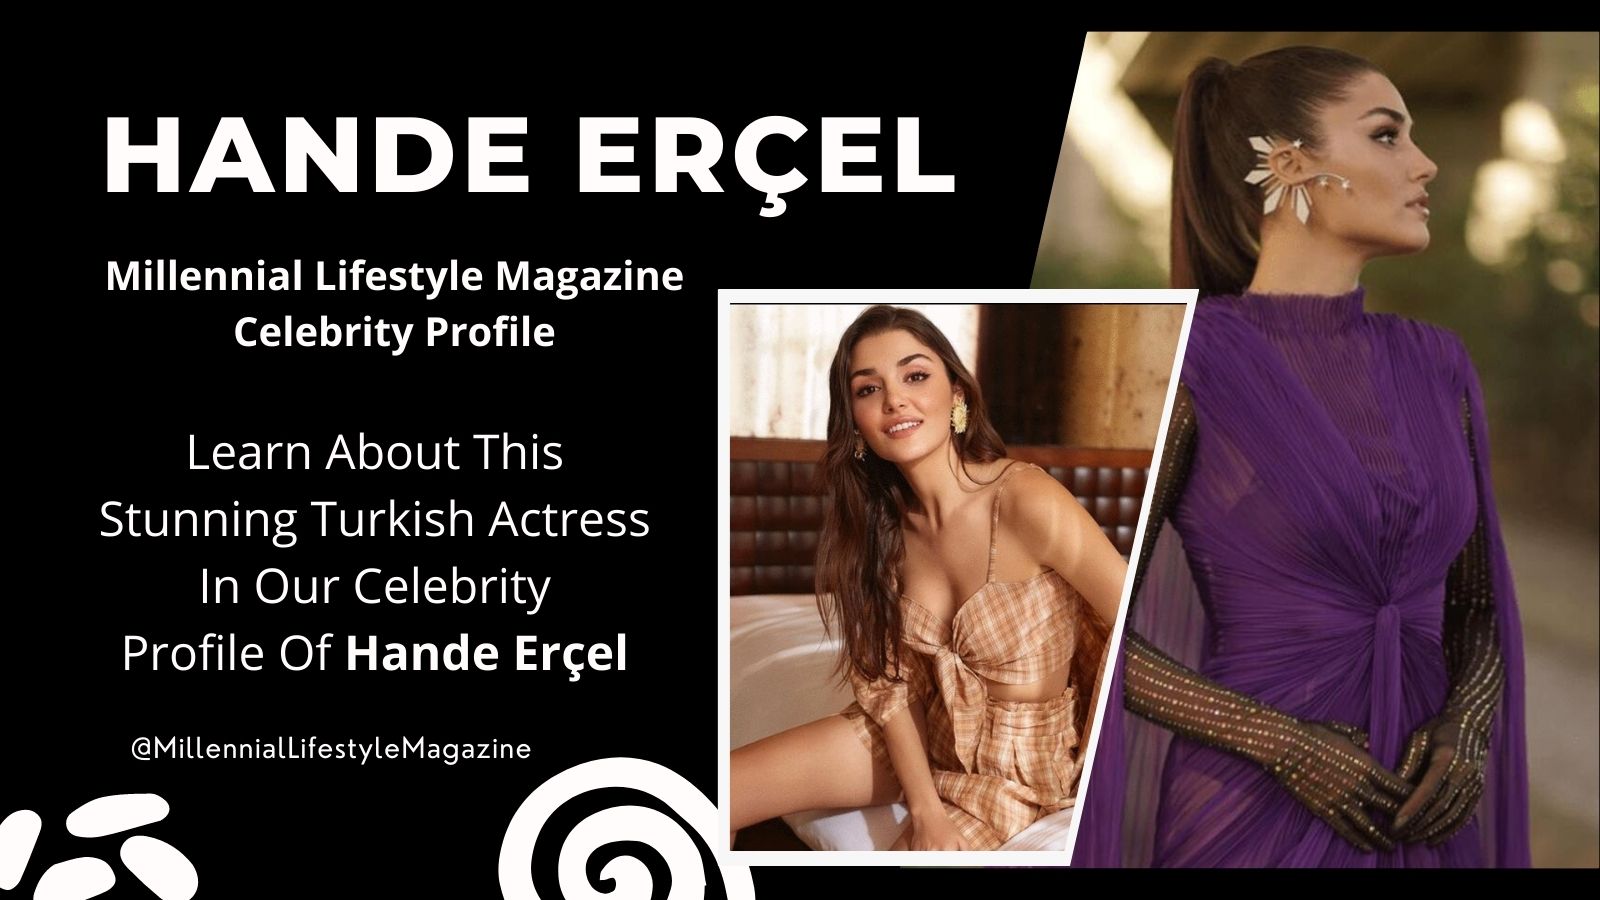 Hande Erçel Profile On Millennial Lifestyle Magazine